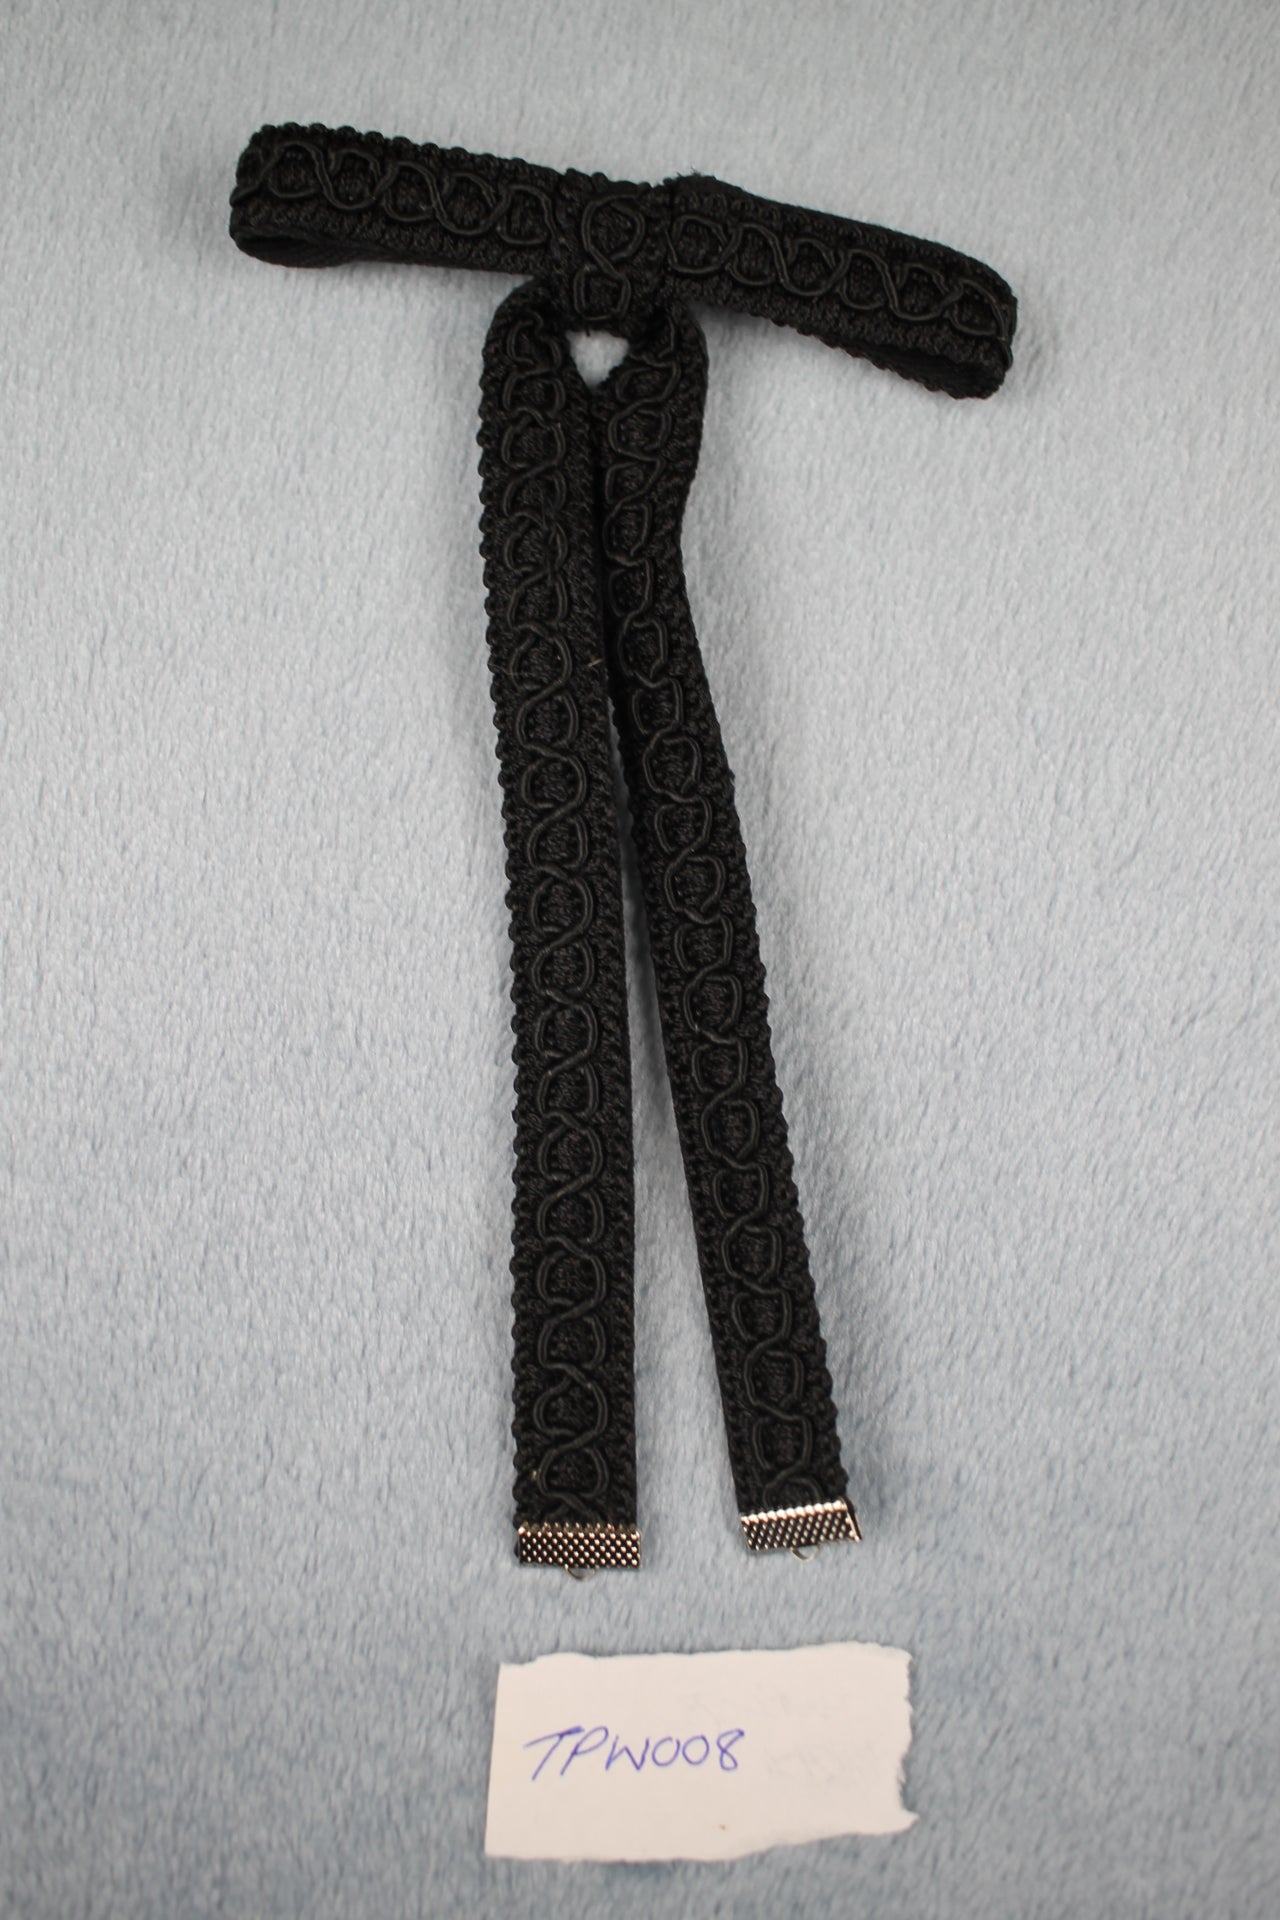 Vintage Style New Black Braid Clip On Western Cowboy Kentucky Bow Tie